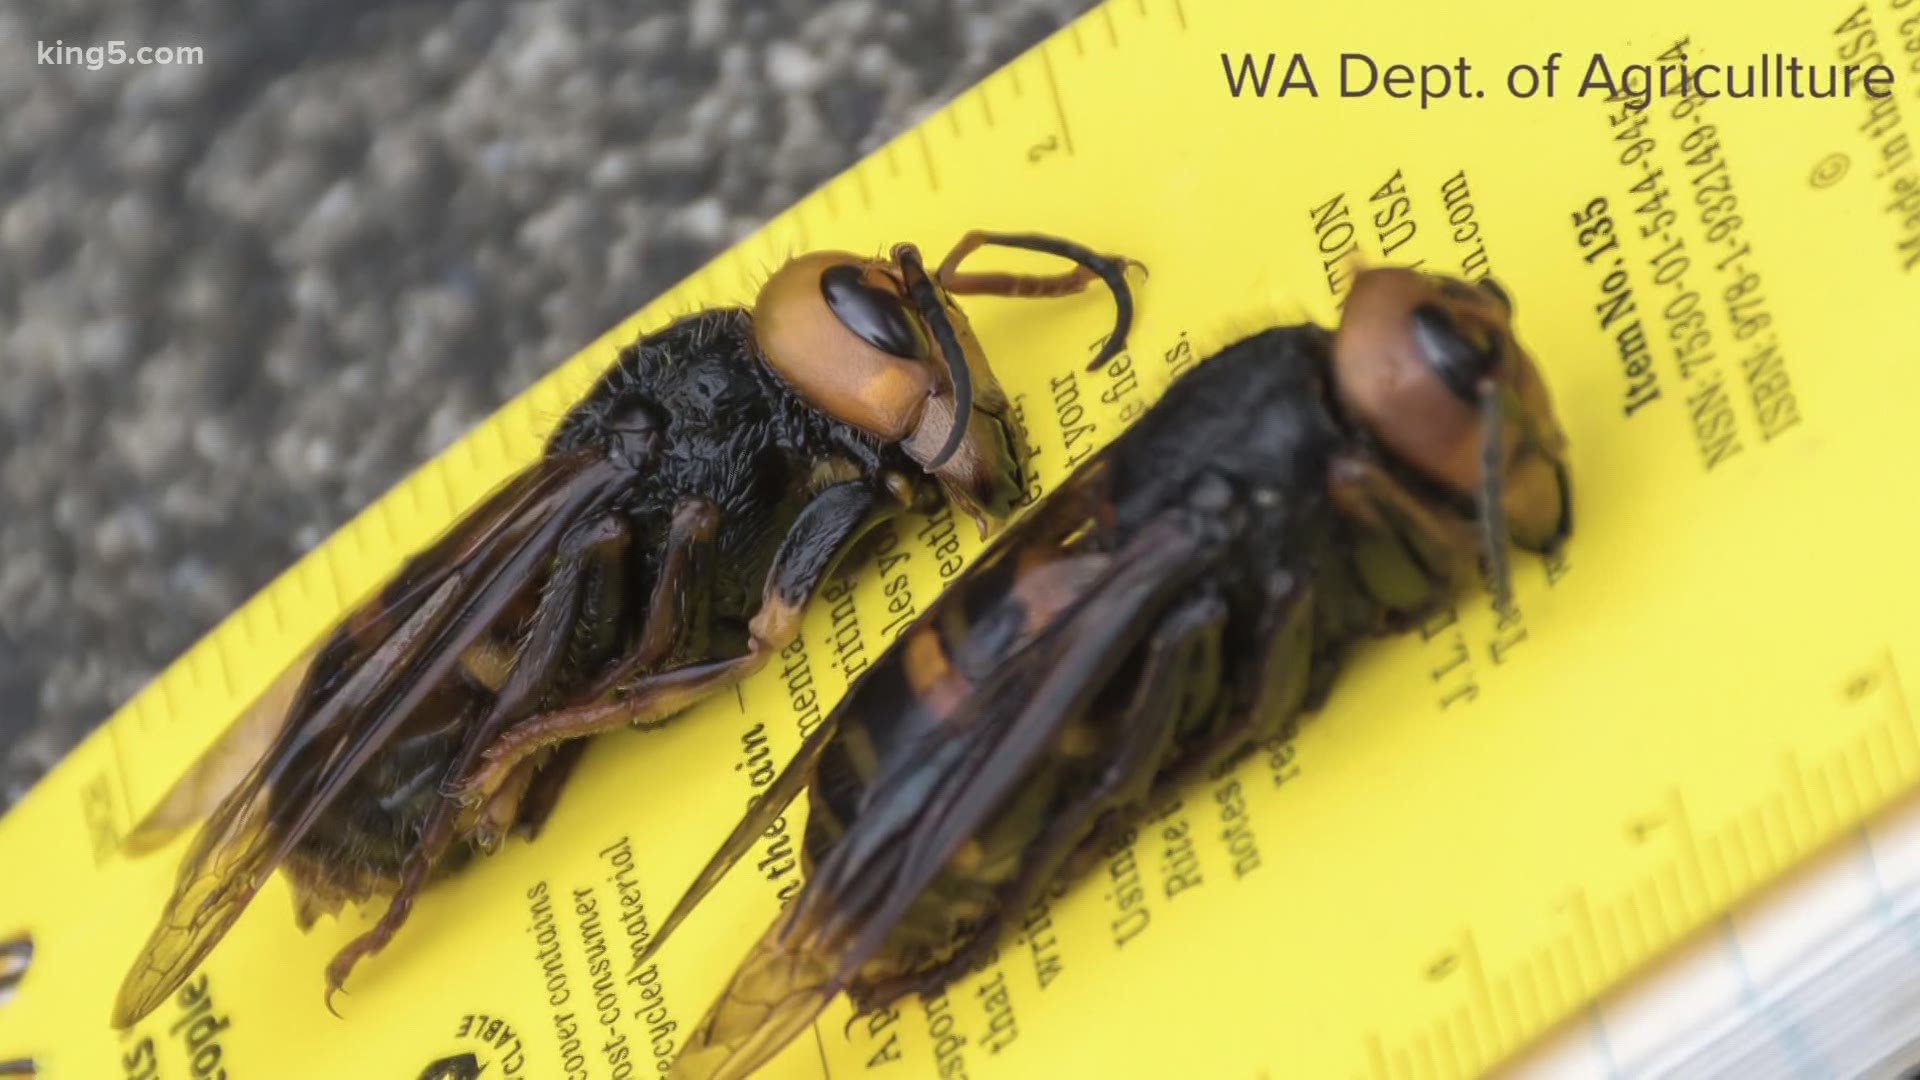 Washington's last confirmed sighting of an Asian giant hornet was in Bellingham on June 11, 2020.